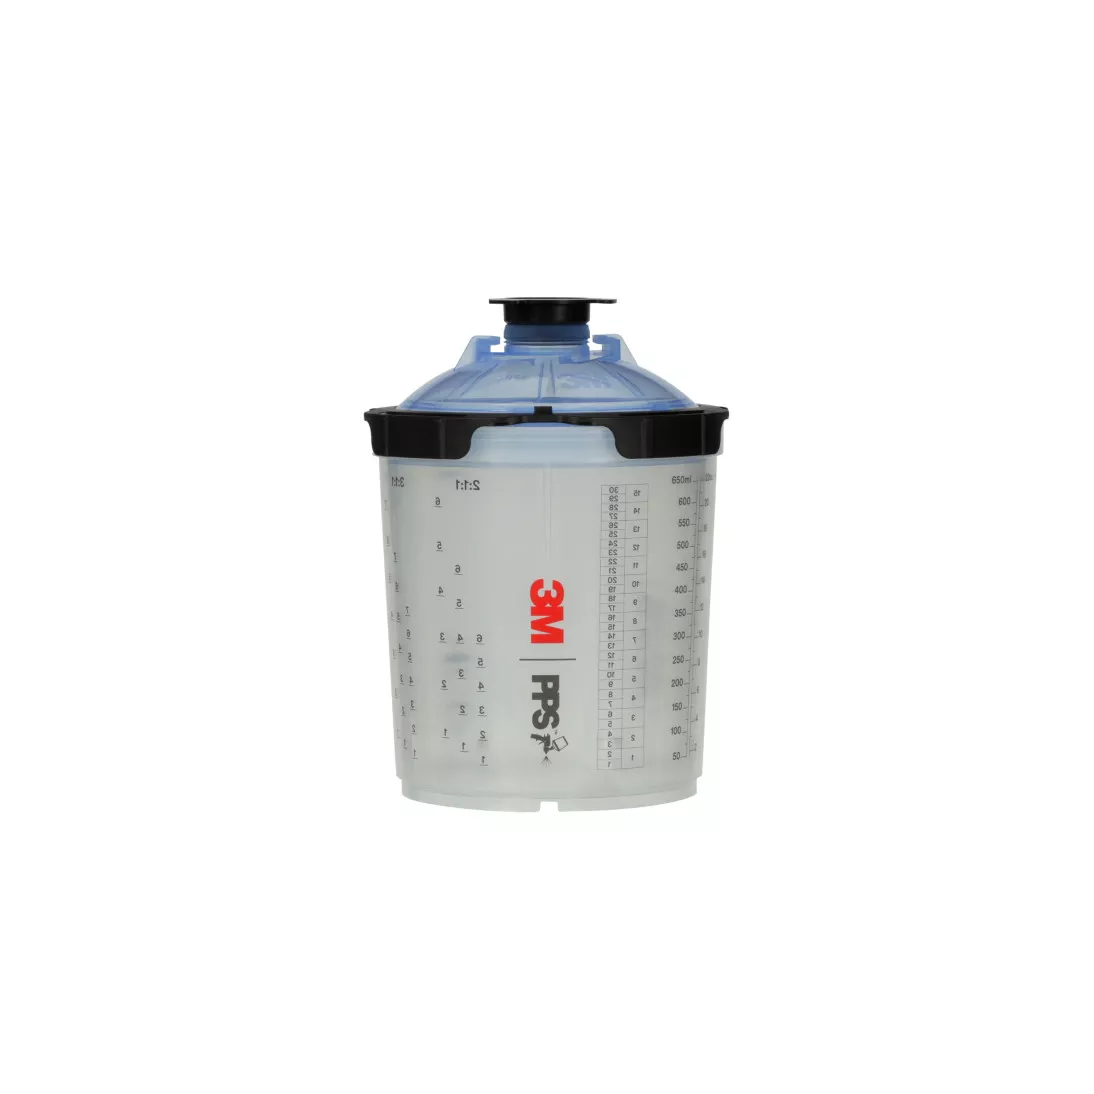 3M™ PPS™ Series 2.0 Spray Cup System Kit, 26301, Standard (22 fl oz, 650
mL), 125 Micron Filter, 1 kit per case